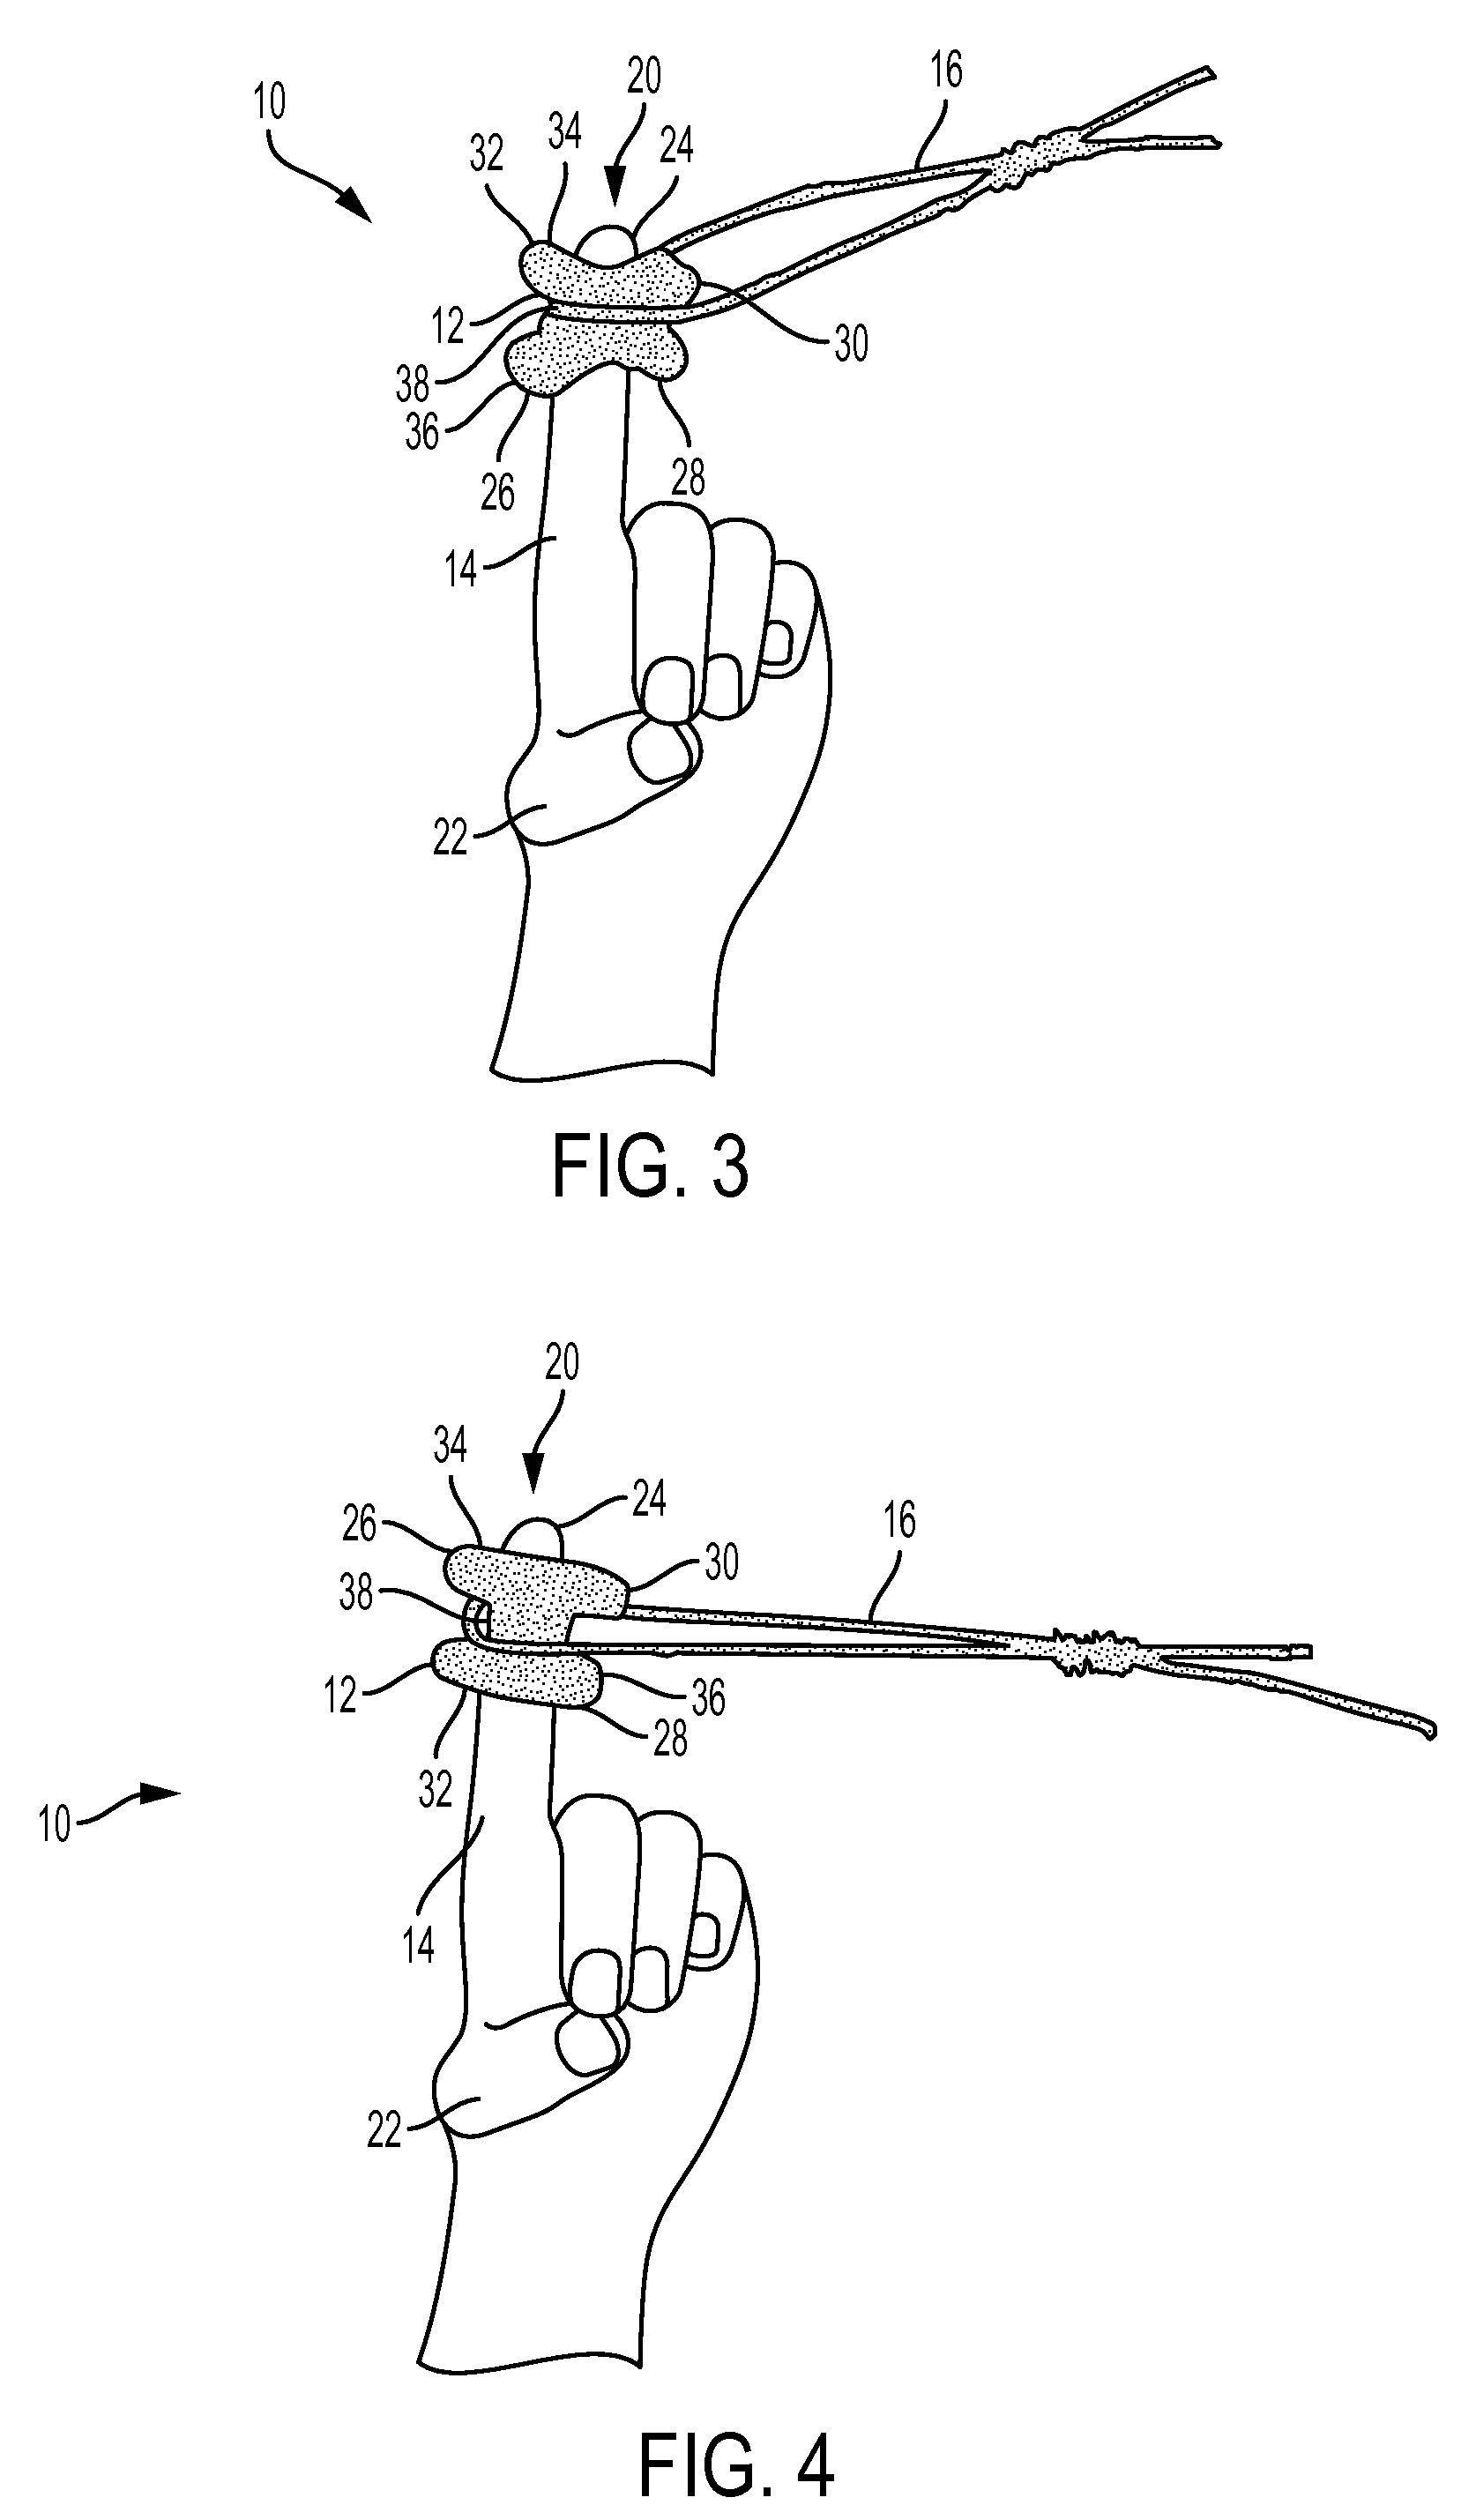 Hair threading apparatus and method